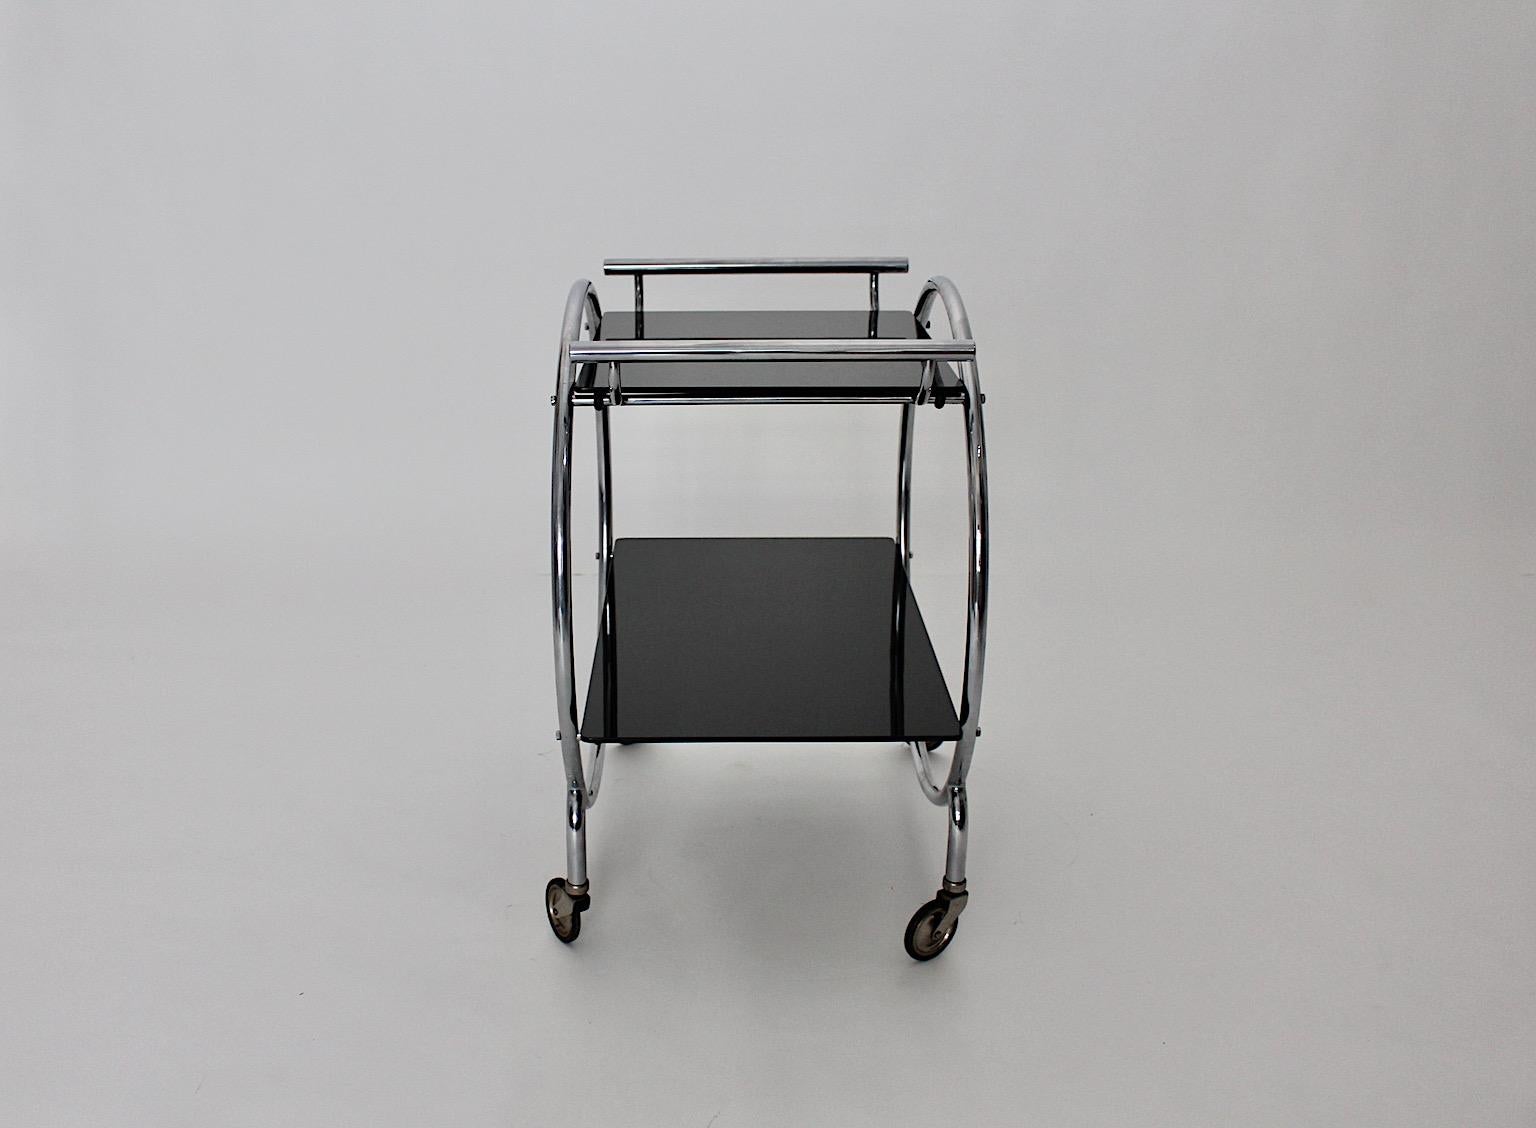 Art Deco Era Vintage Bauhaus Chromed Metal Glass Bar Cart or Cart, 1930s Germany For Sale 3